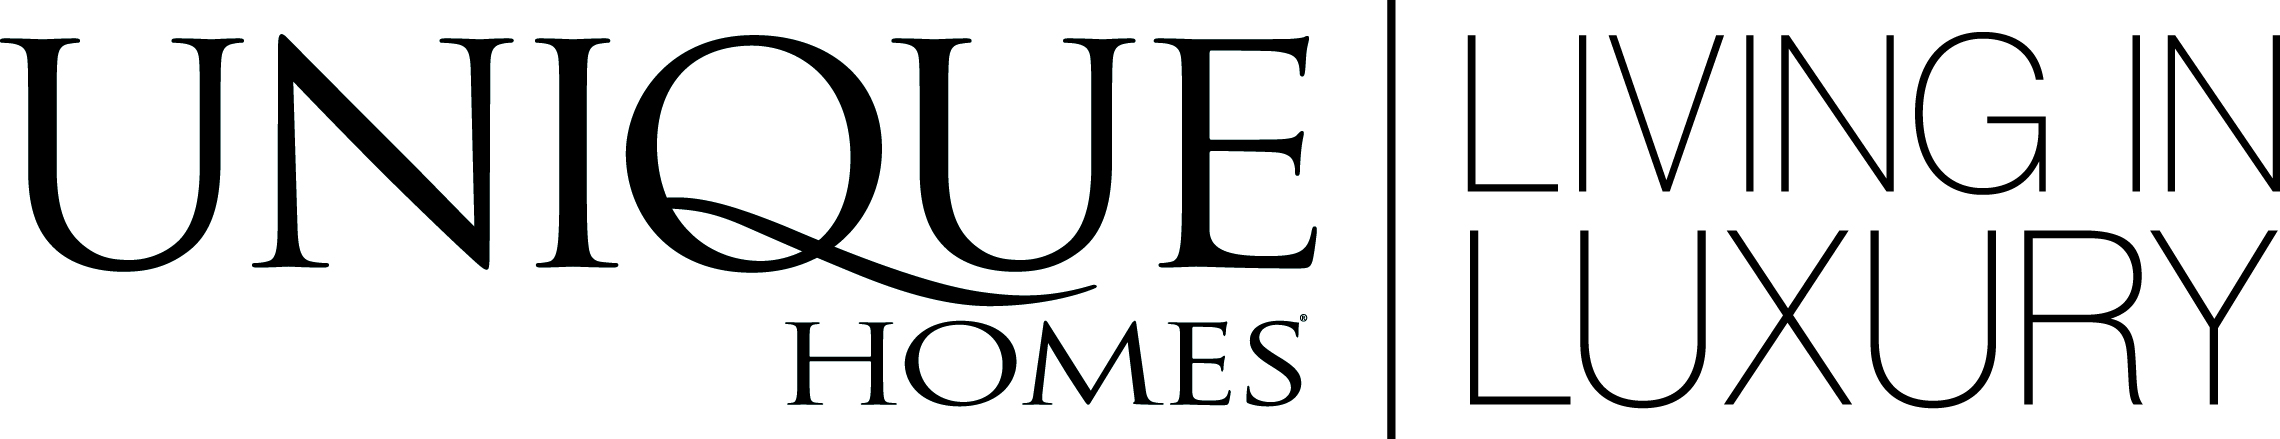 uniquehomes logo